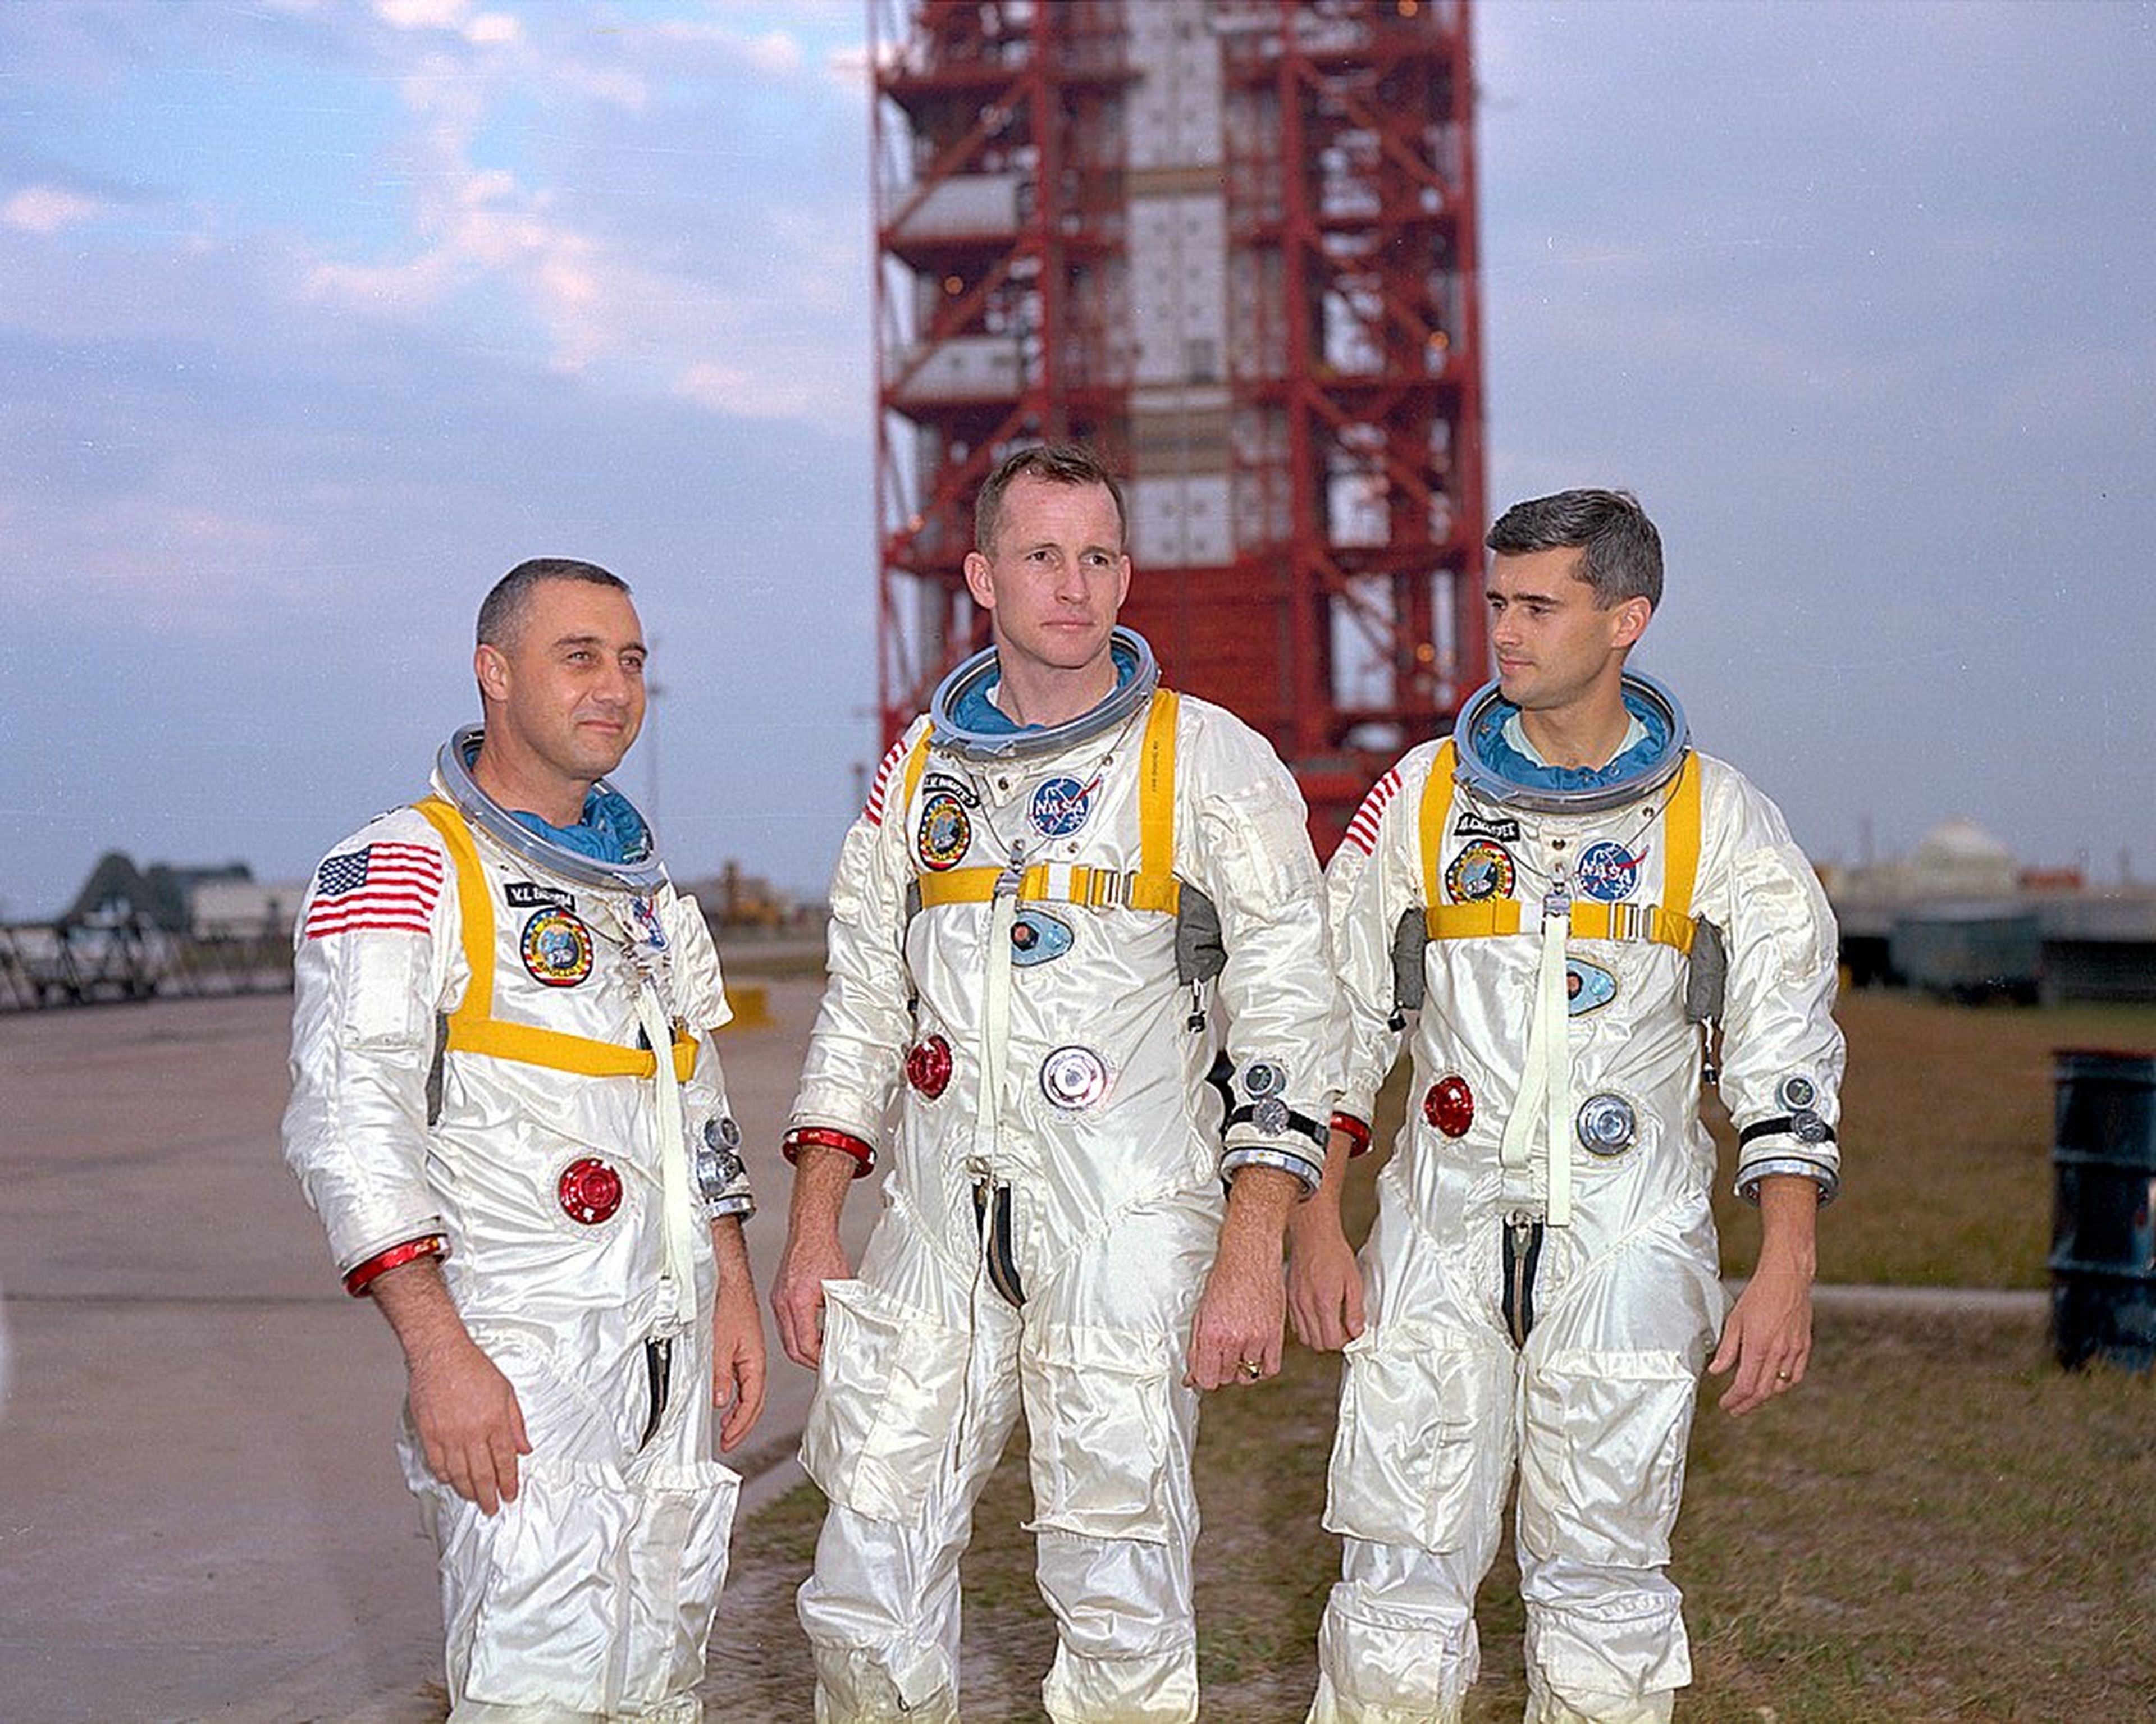 Astronautas del Apolo 1